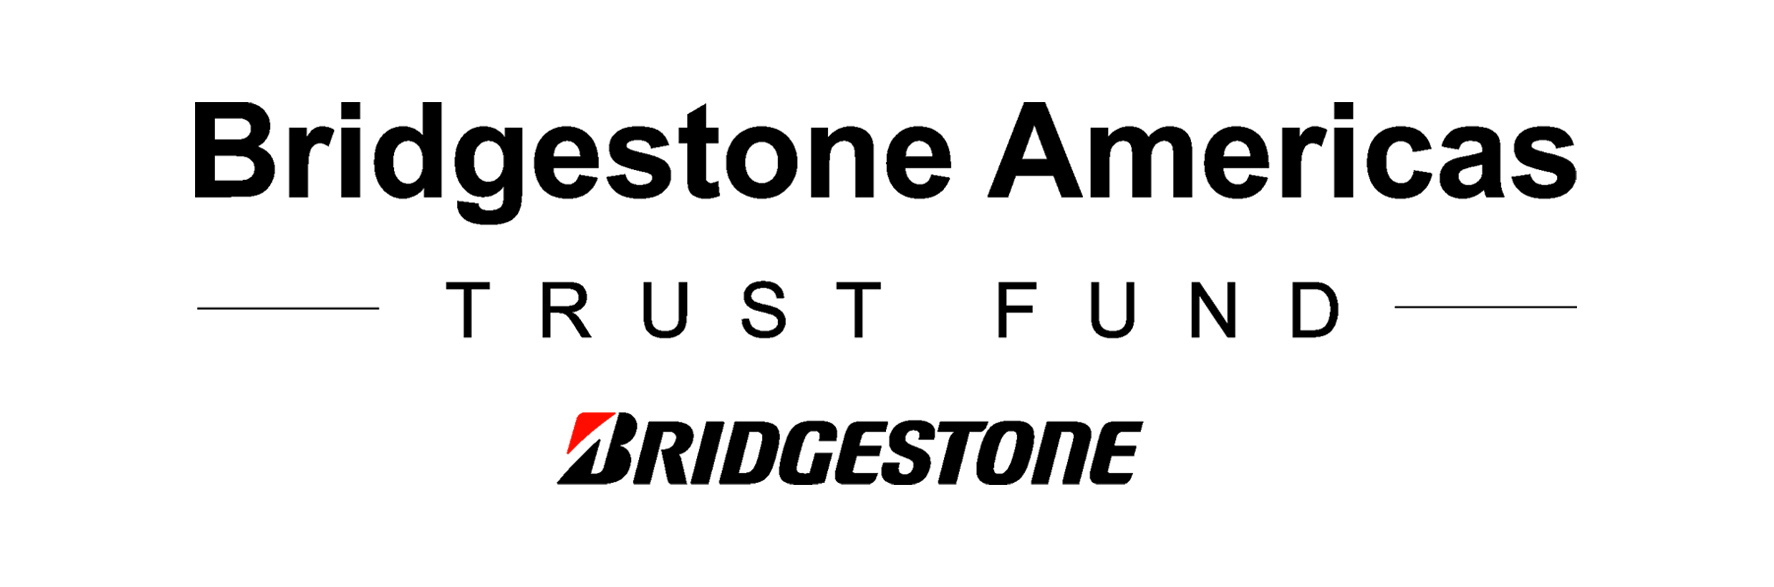 BS Americas Trust Fund logo Arial clr (1)